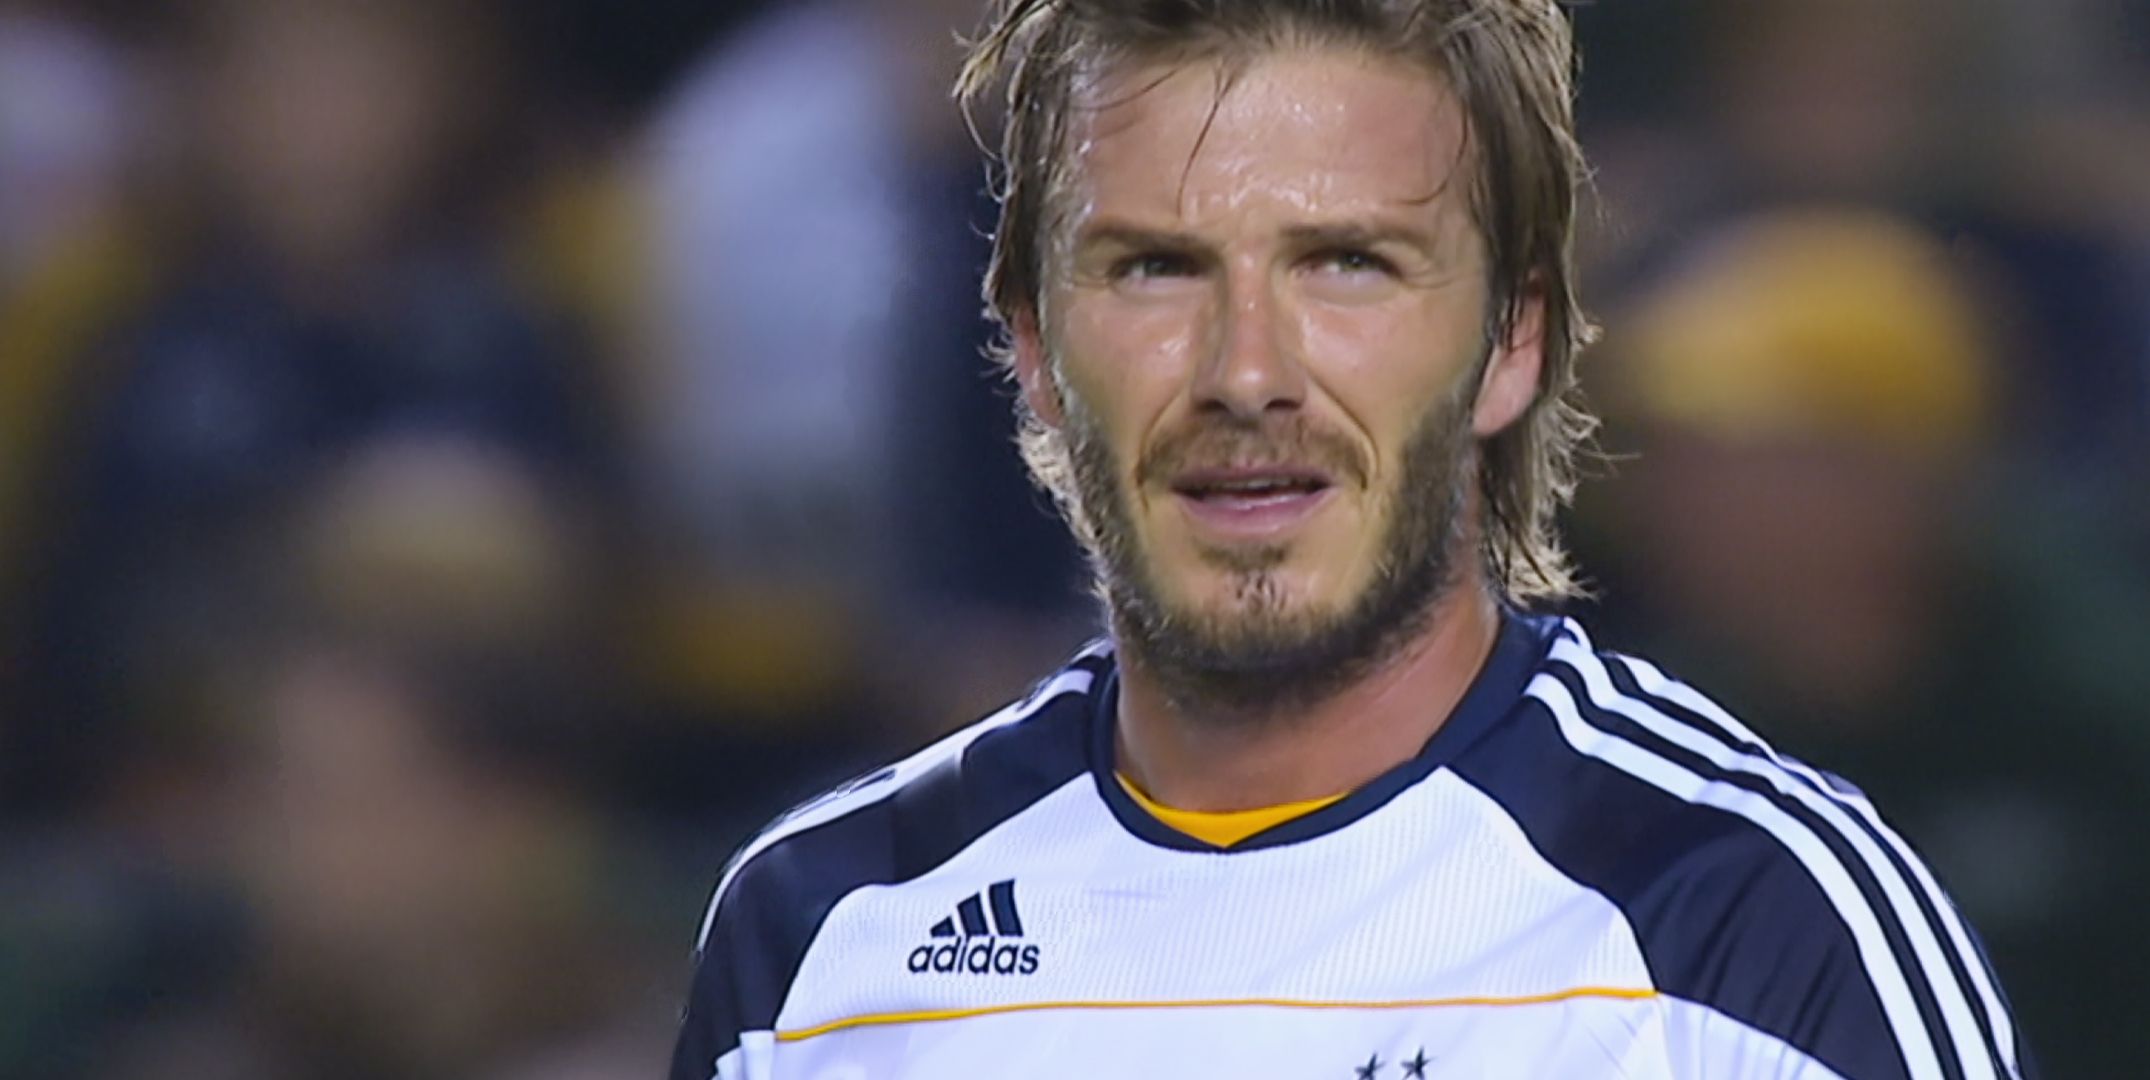 4 ways to score David Beckham's style